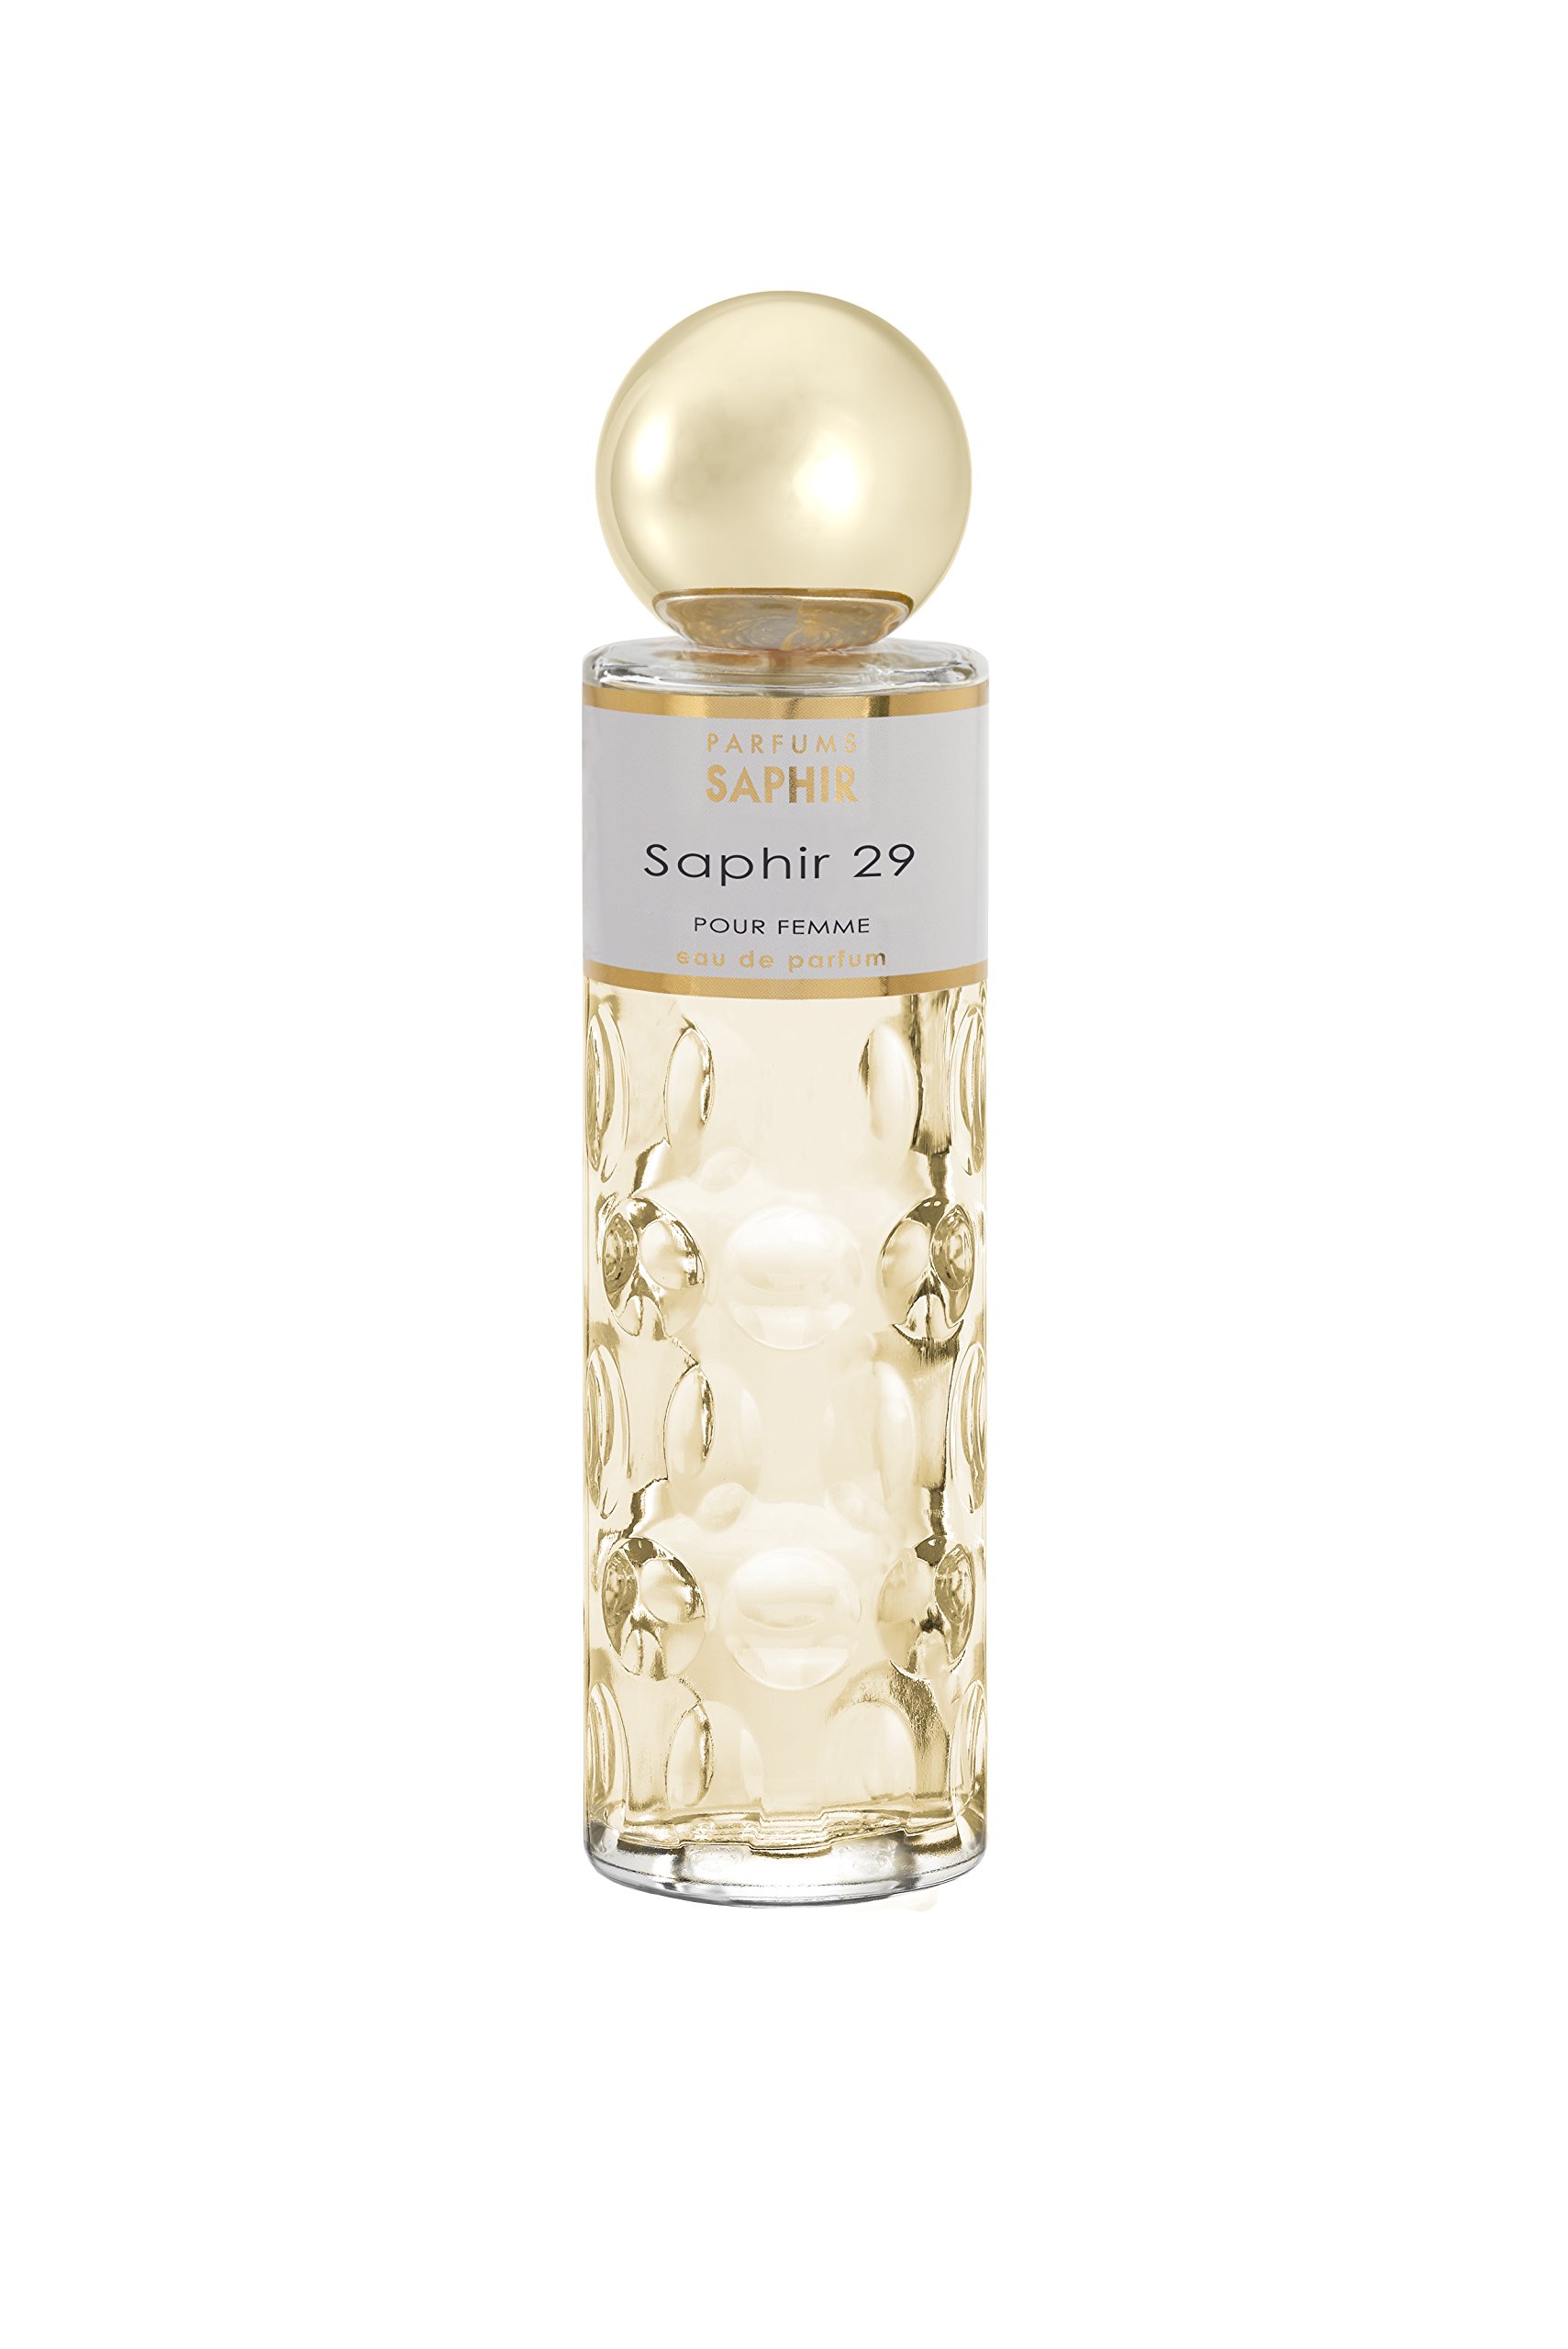 Image of Parfums Saphir - Eau de Parfum 200 ml - saphir 29